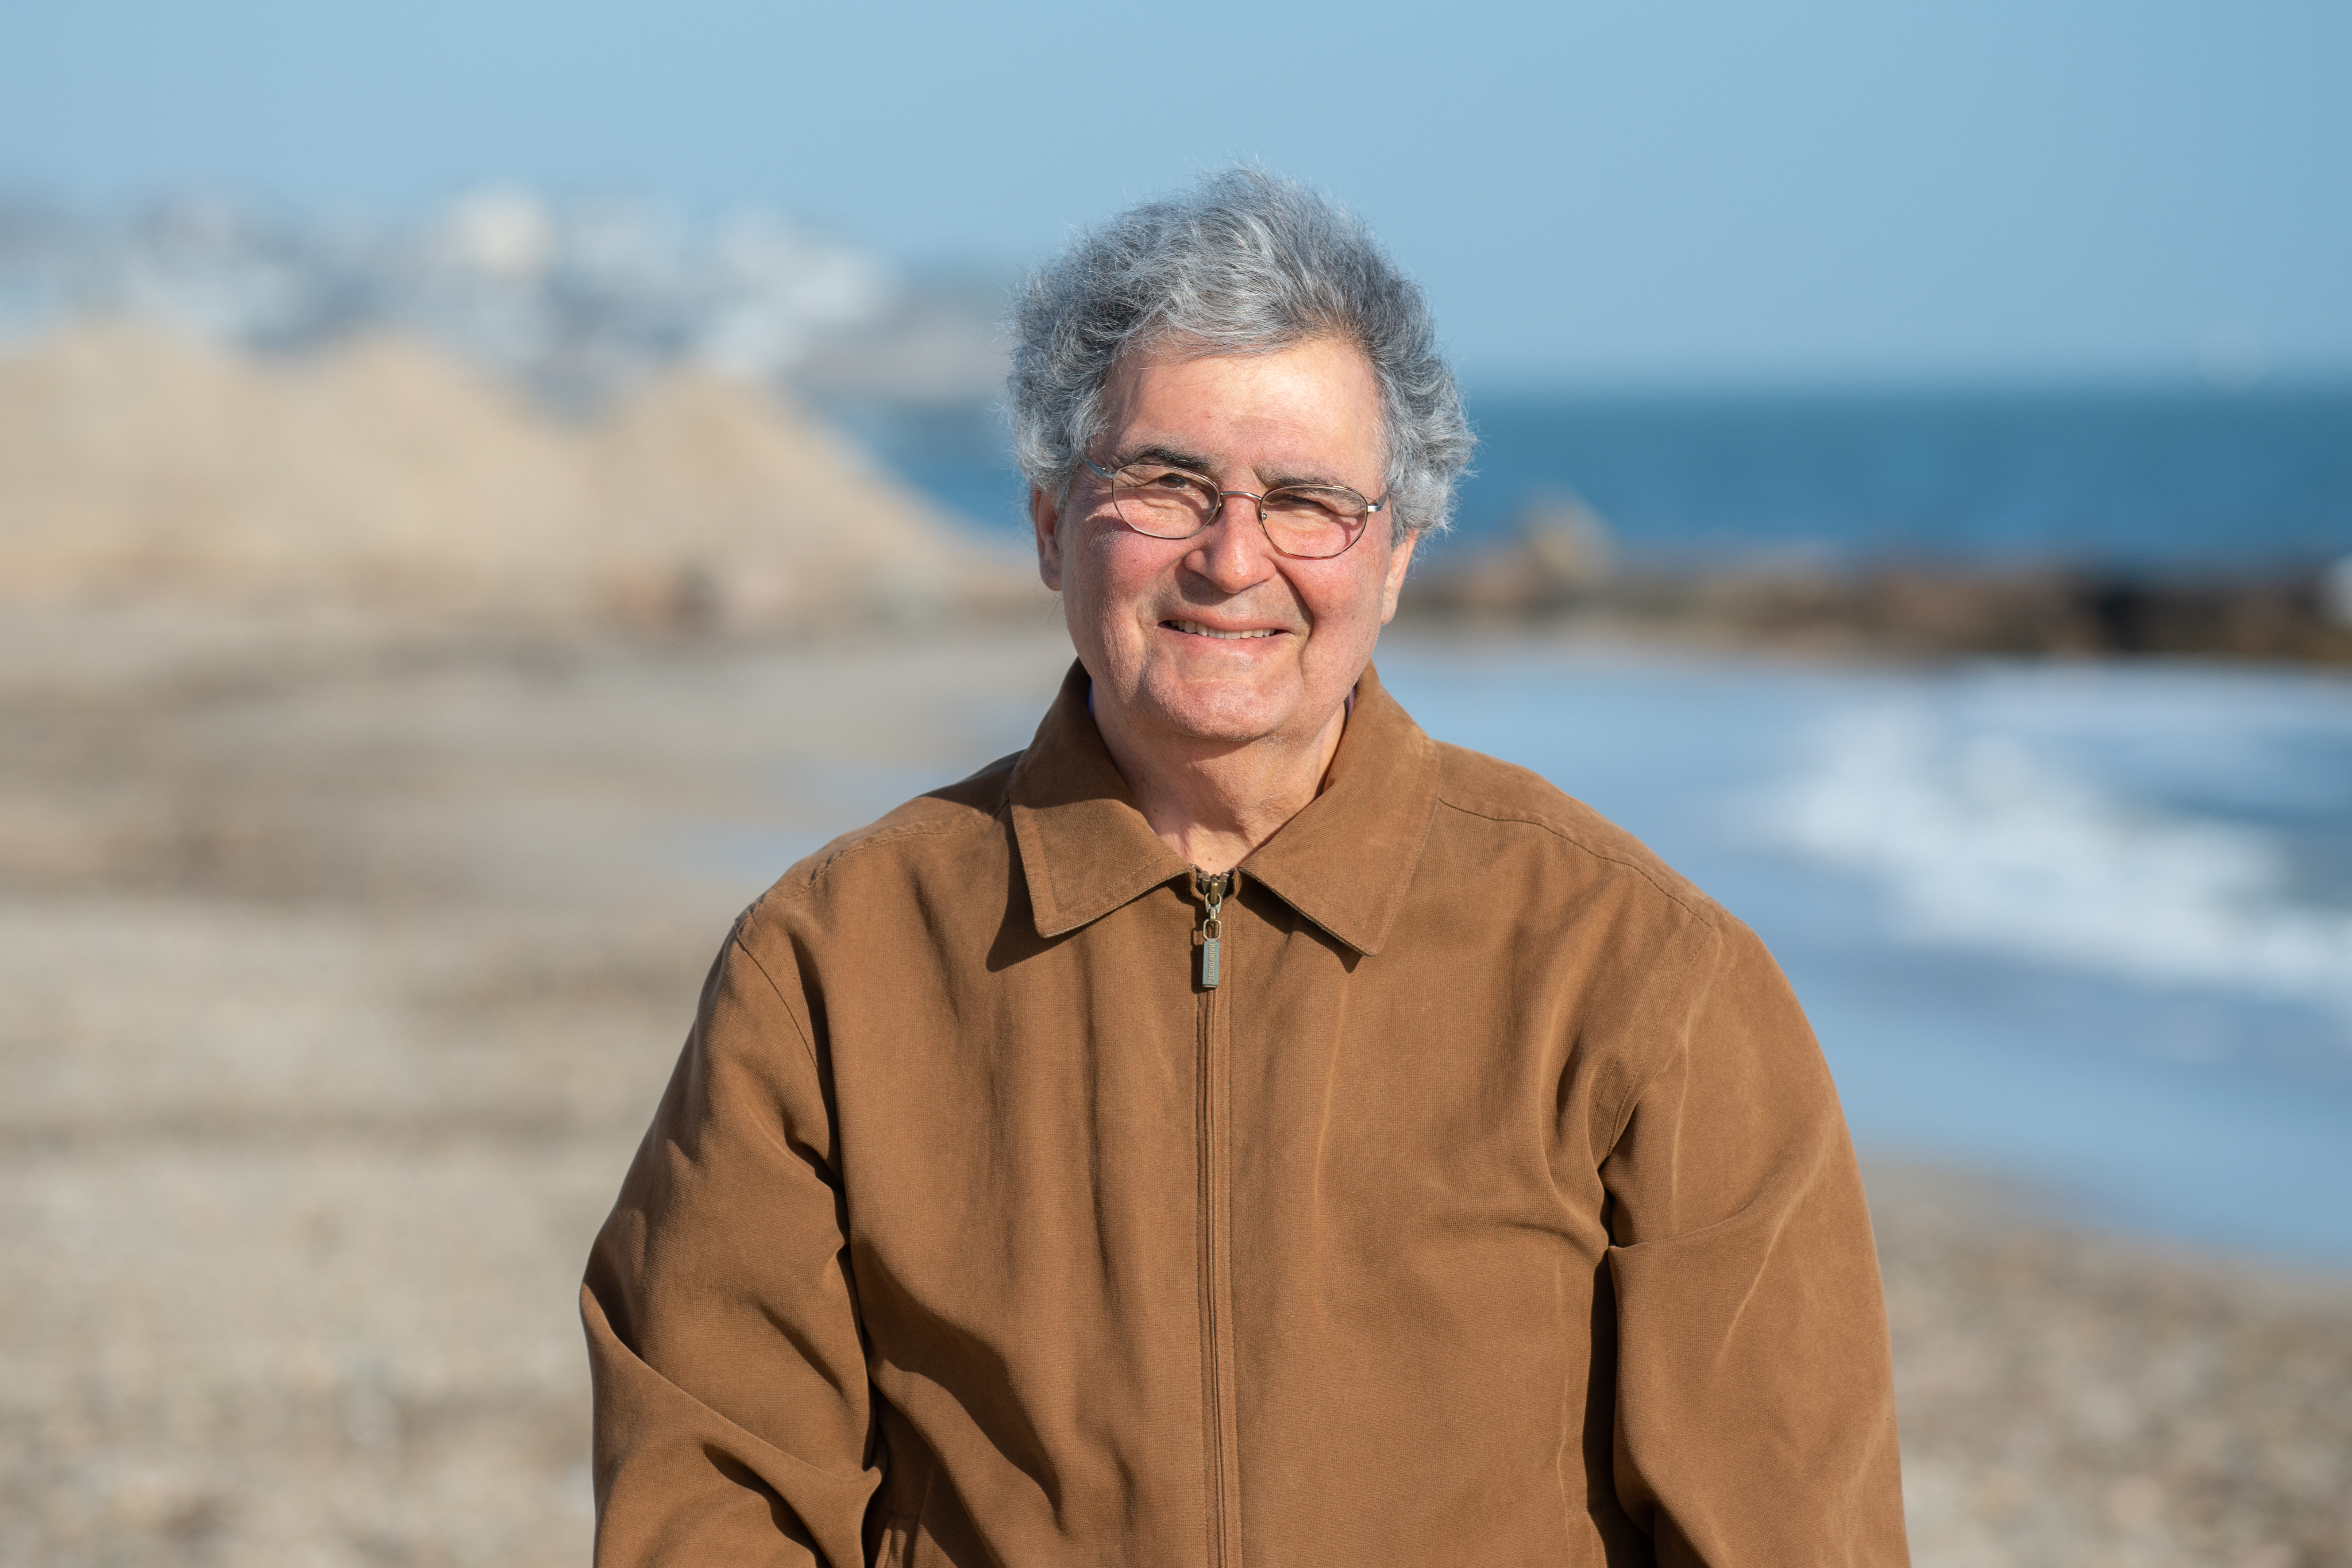 Dr. Roger Kligler, Compassion & Choices' Mass. plaintiff with metastatic prostate cancer